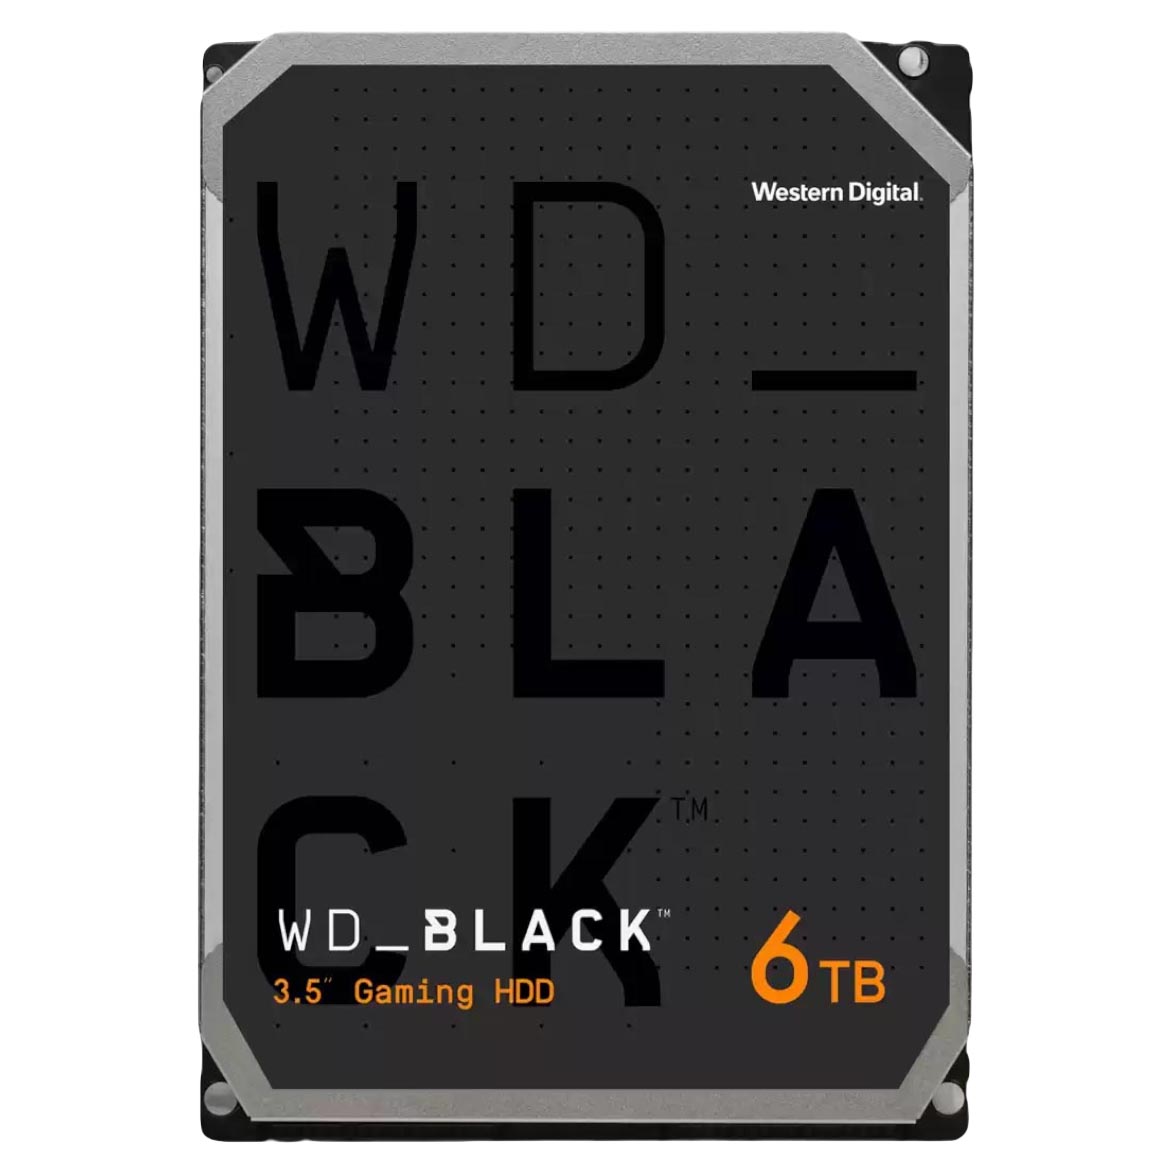 Внутренний жесткий диск Western Digital WD Black Gaming, WD6004FZWX, 6 Тб жесткий диск western digital wd gold 6 тб 3 5 wd6003fryz